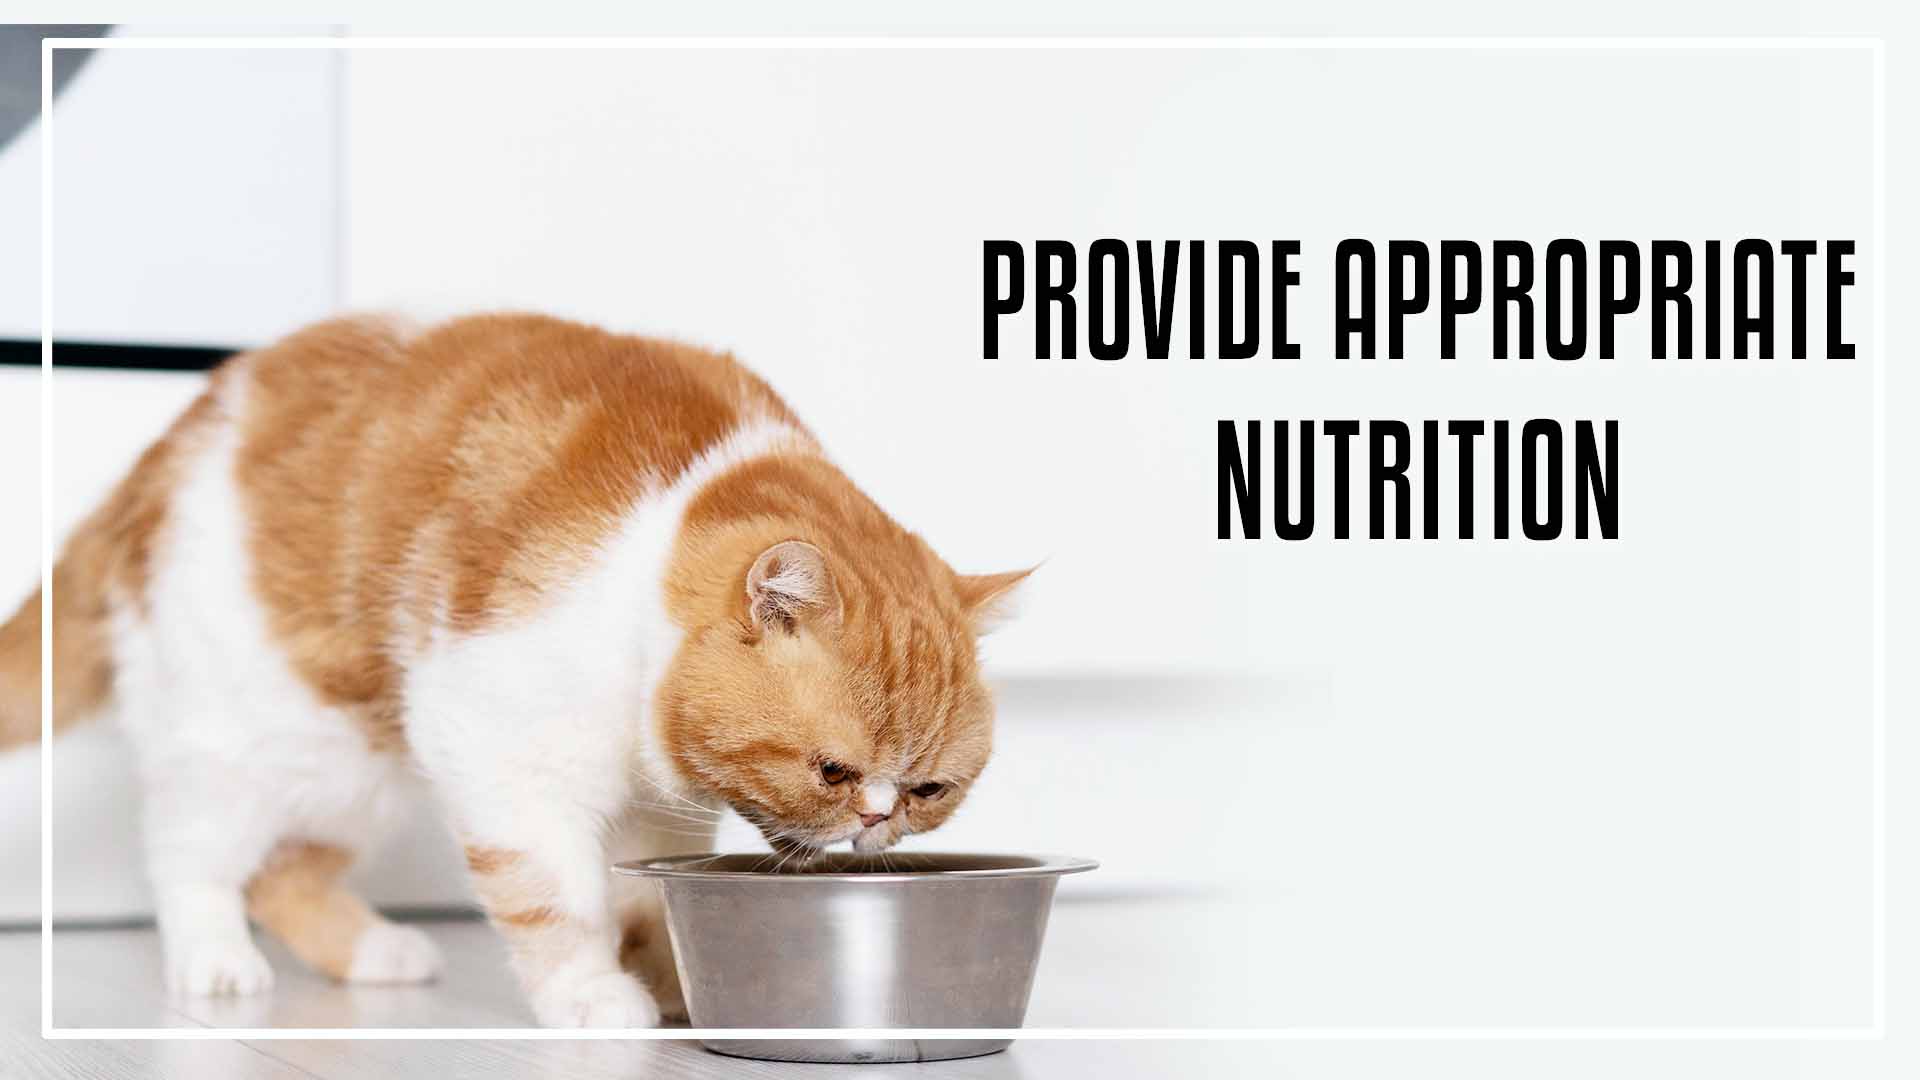 Provide appropriate nutrition